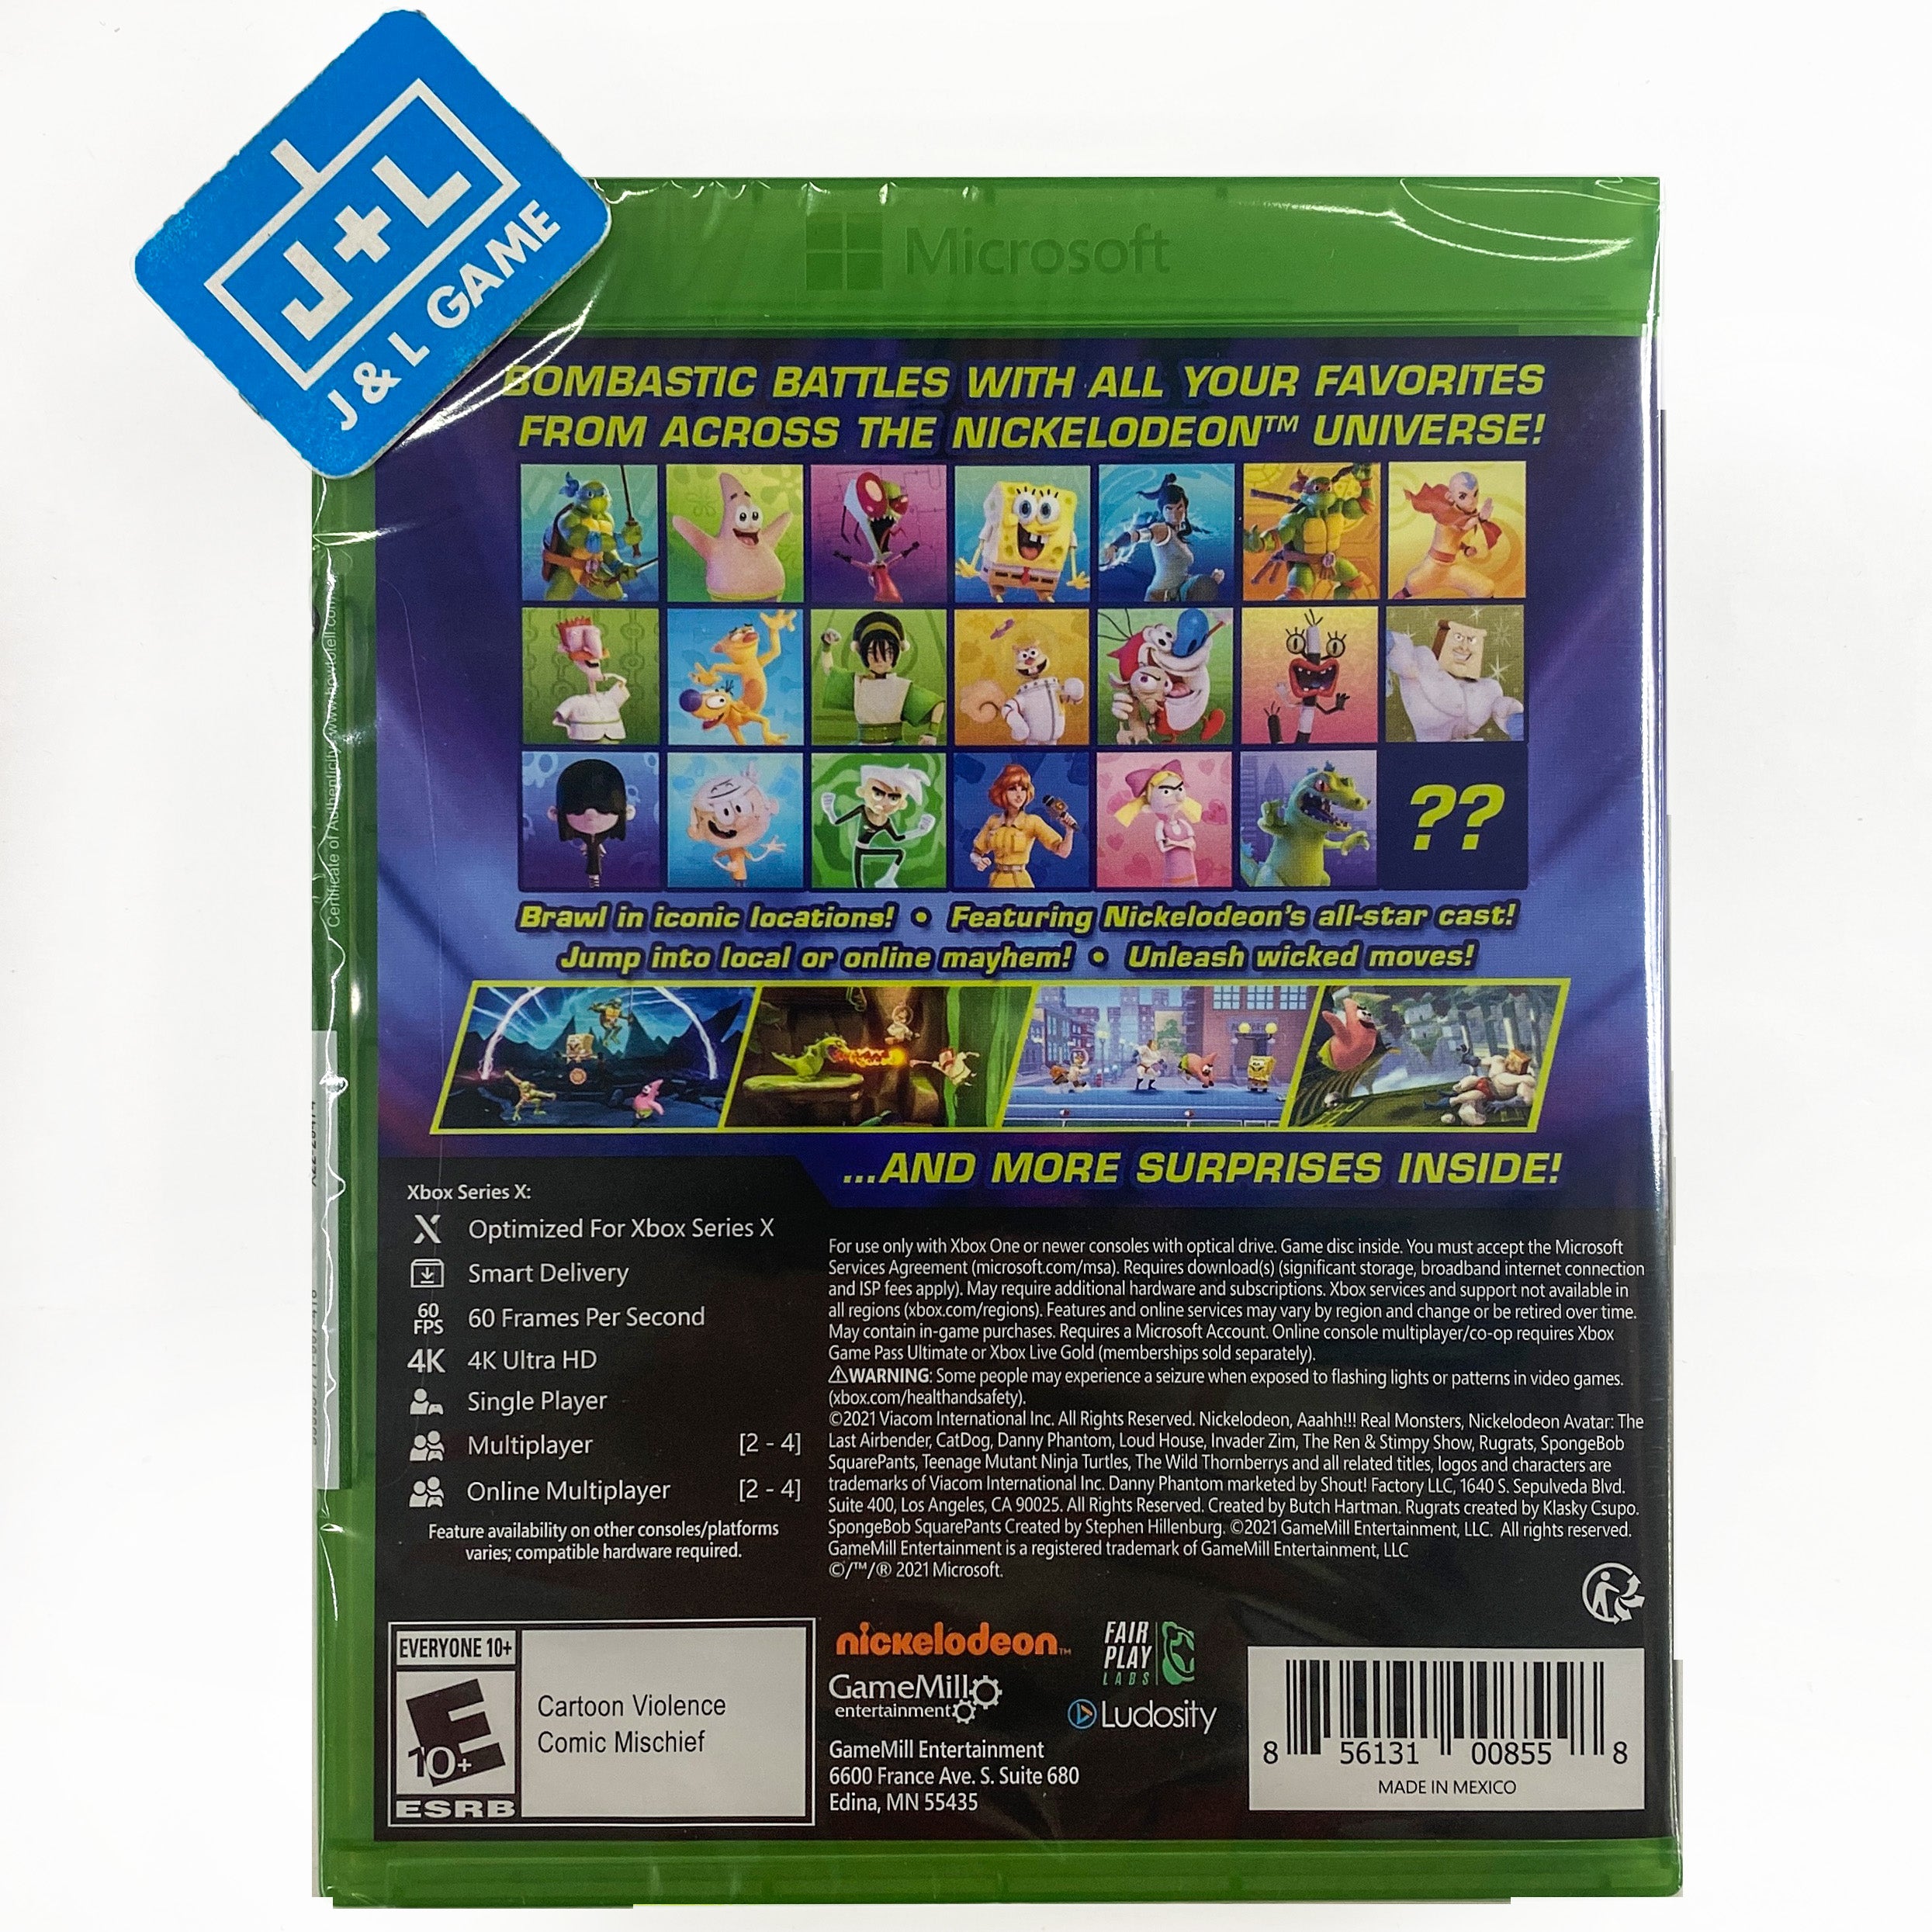 Nickelodeon All Star Brawl - (XSX) Xbox Series X Video Games Game Mill   